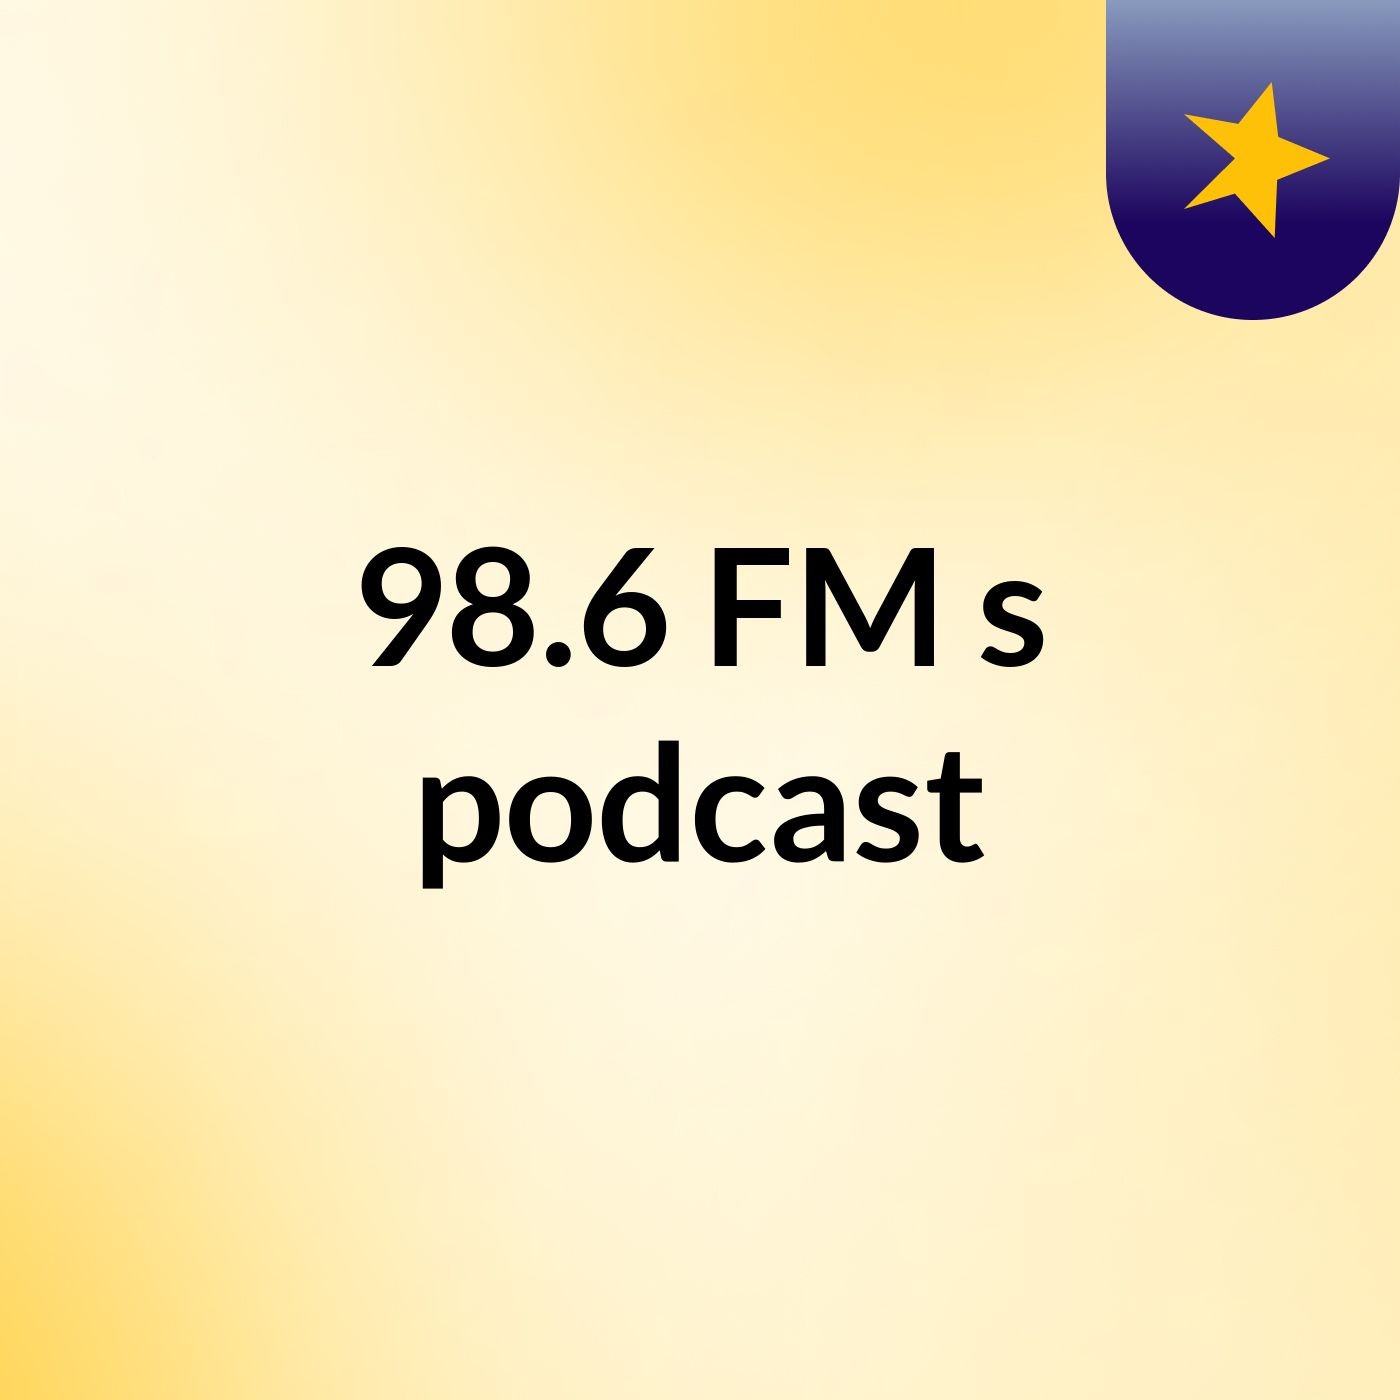 98.6 FM's podcast